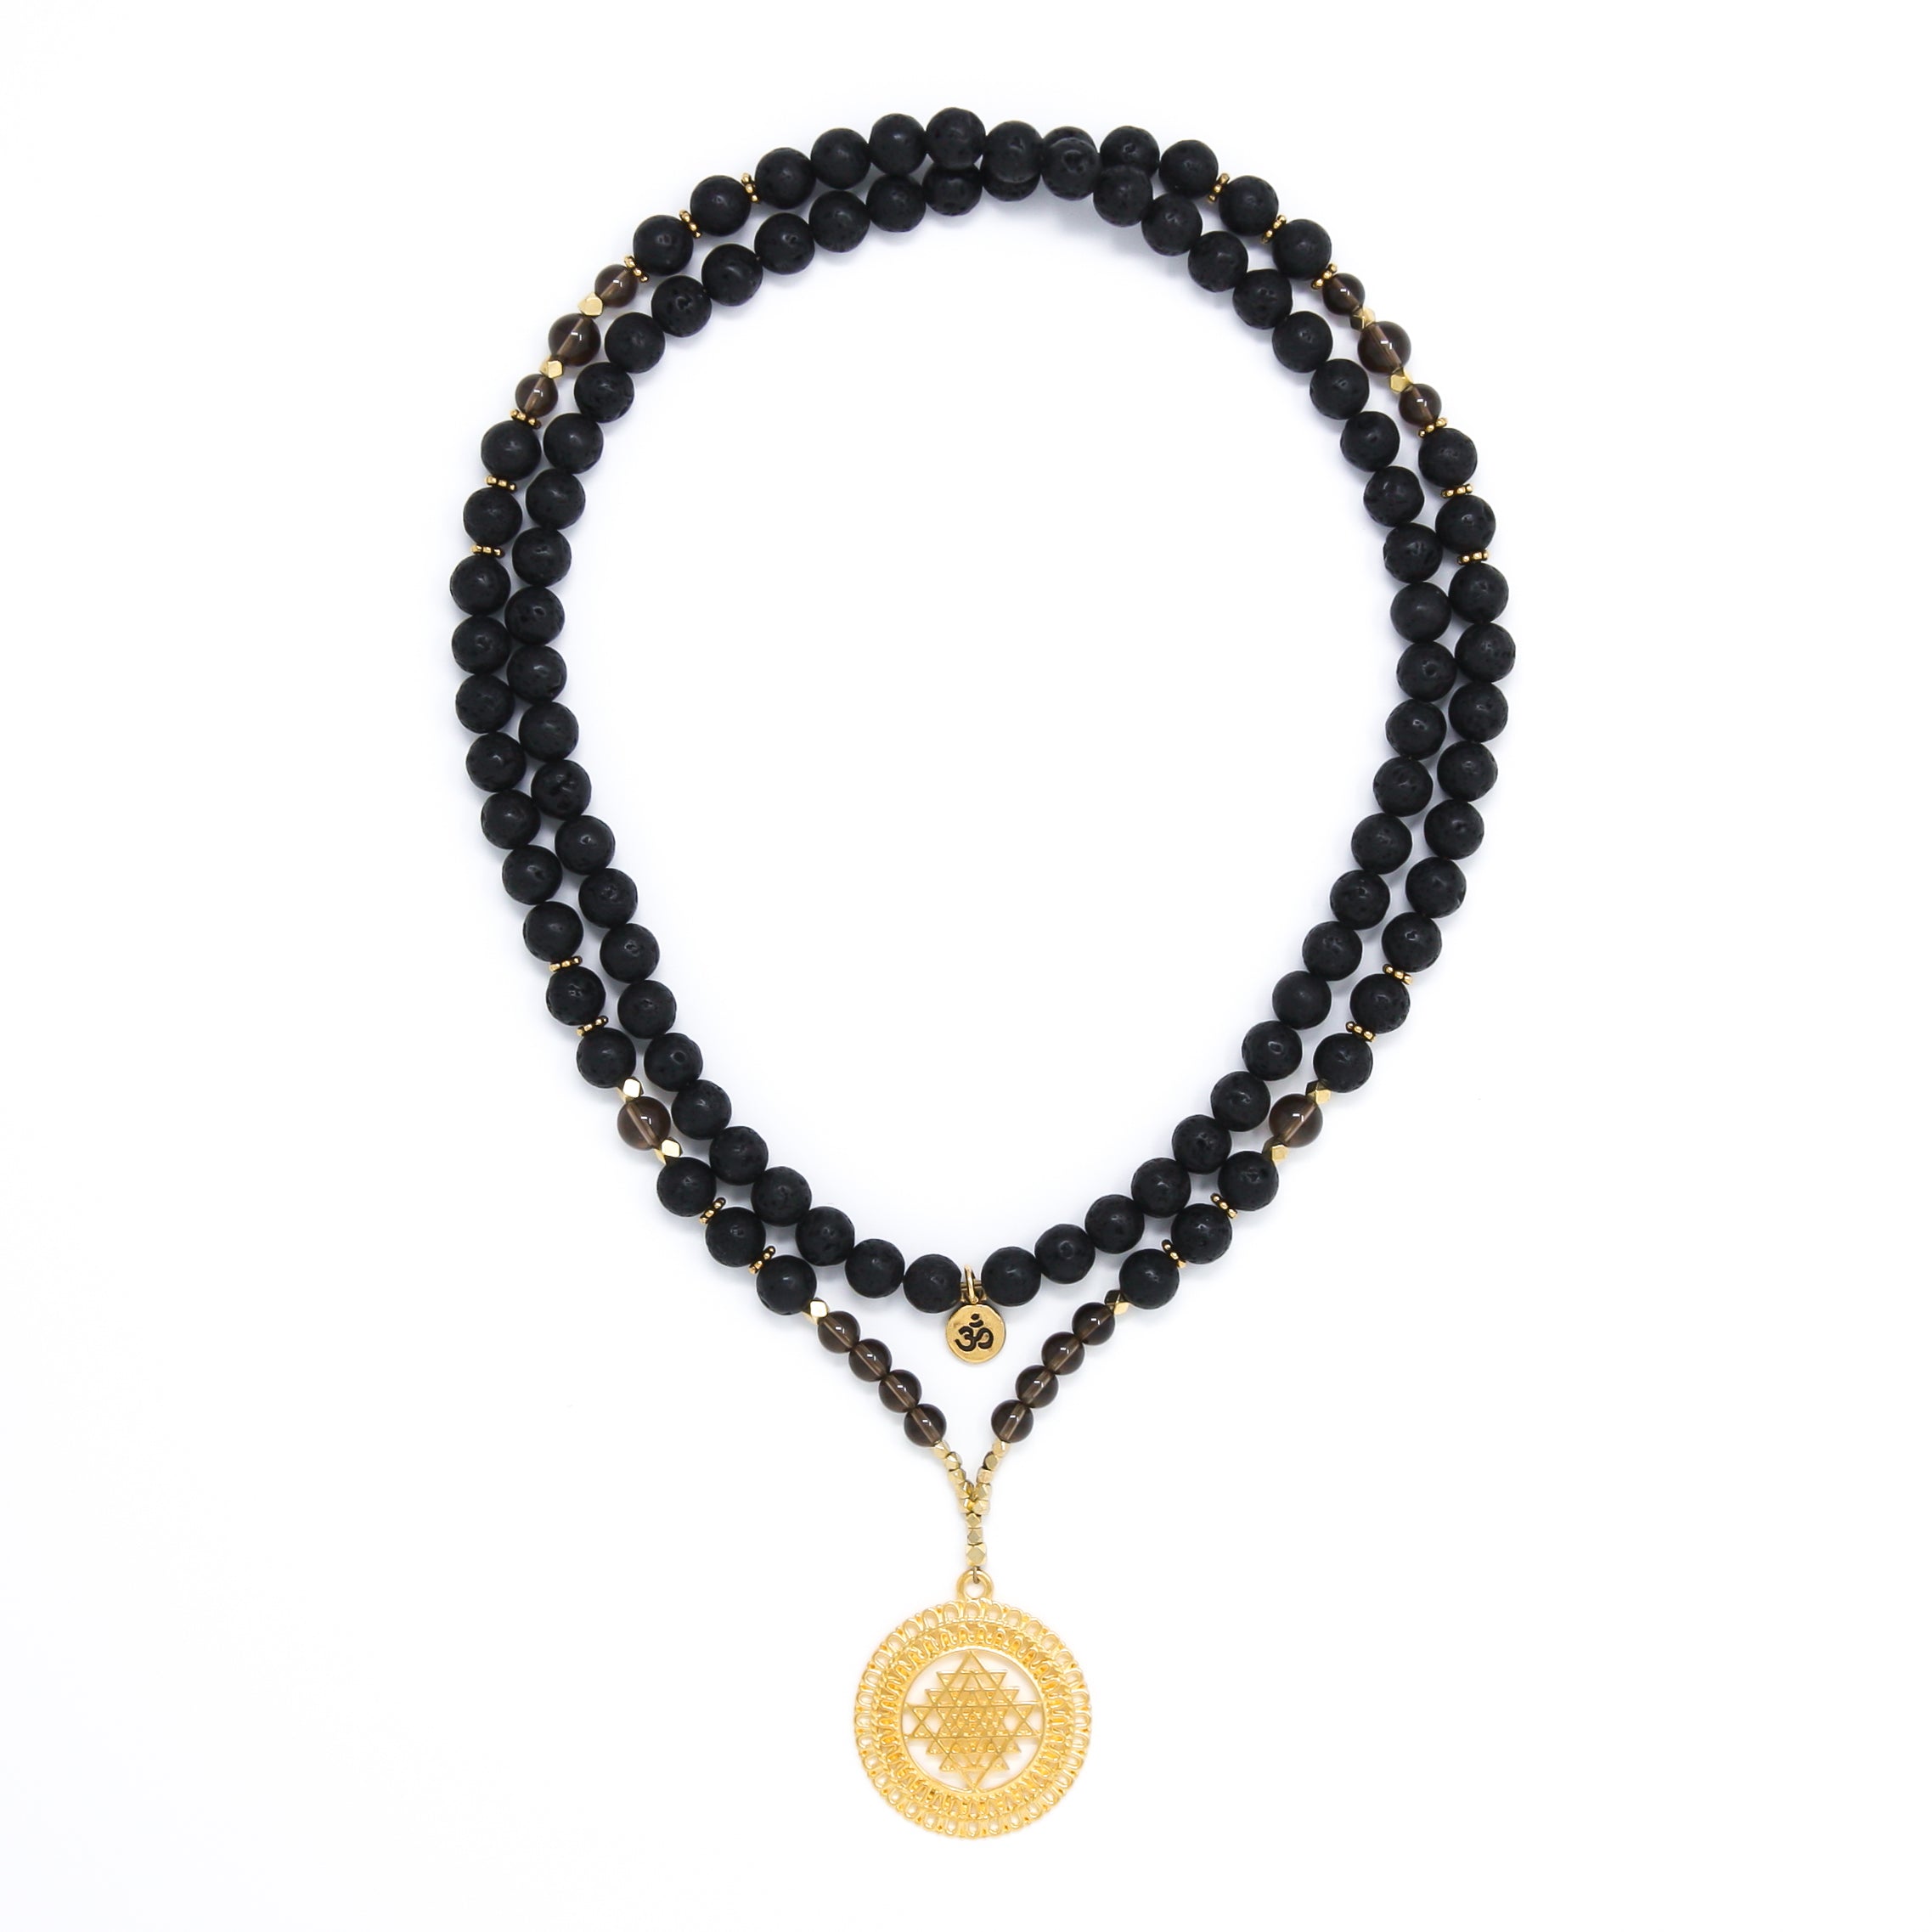 Black Lava and Smoky Quartz Mala Necklace with Gold Sri Yantra Pendant, black, brown and gold mala prayer beads, spiritual jewelry